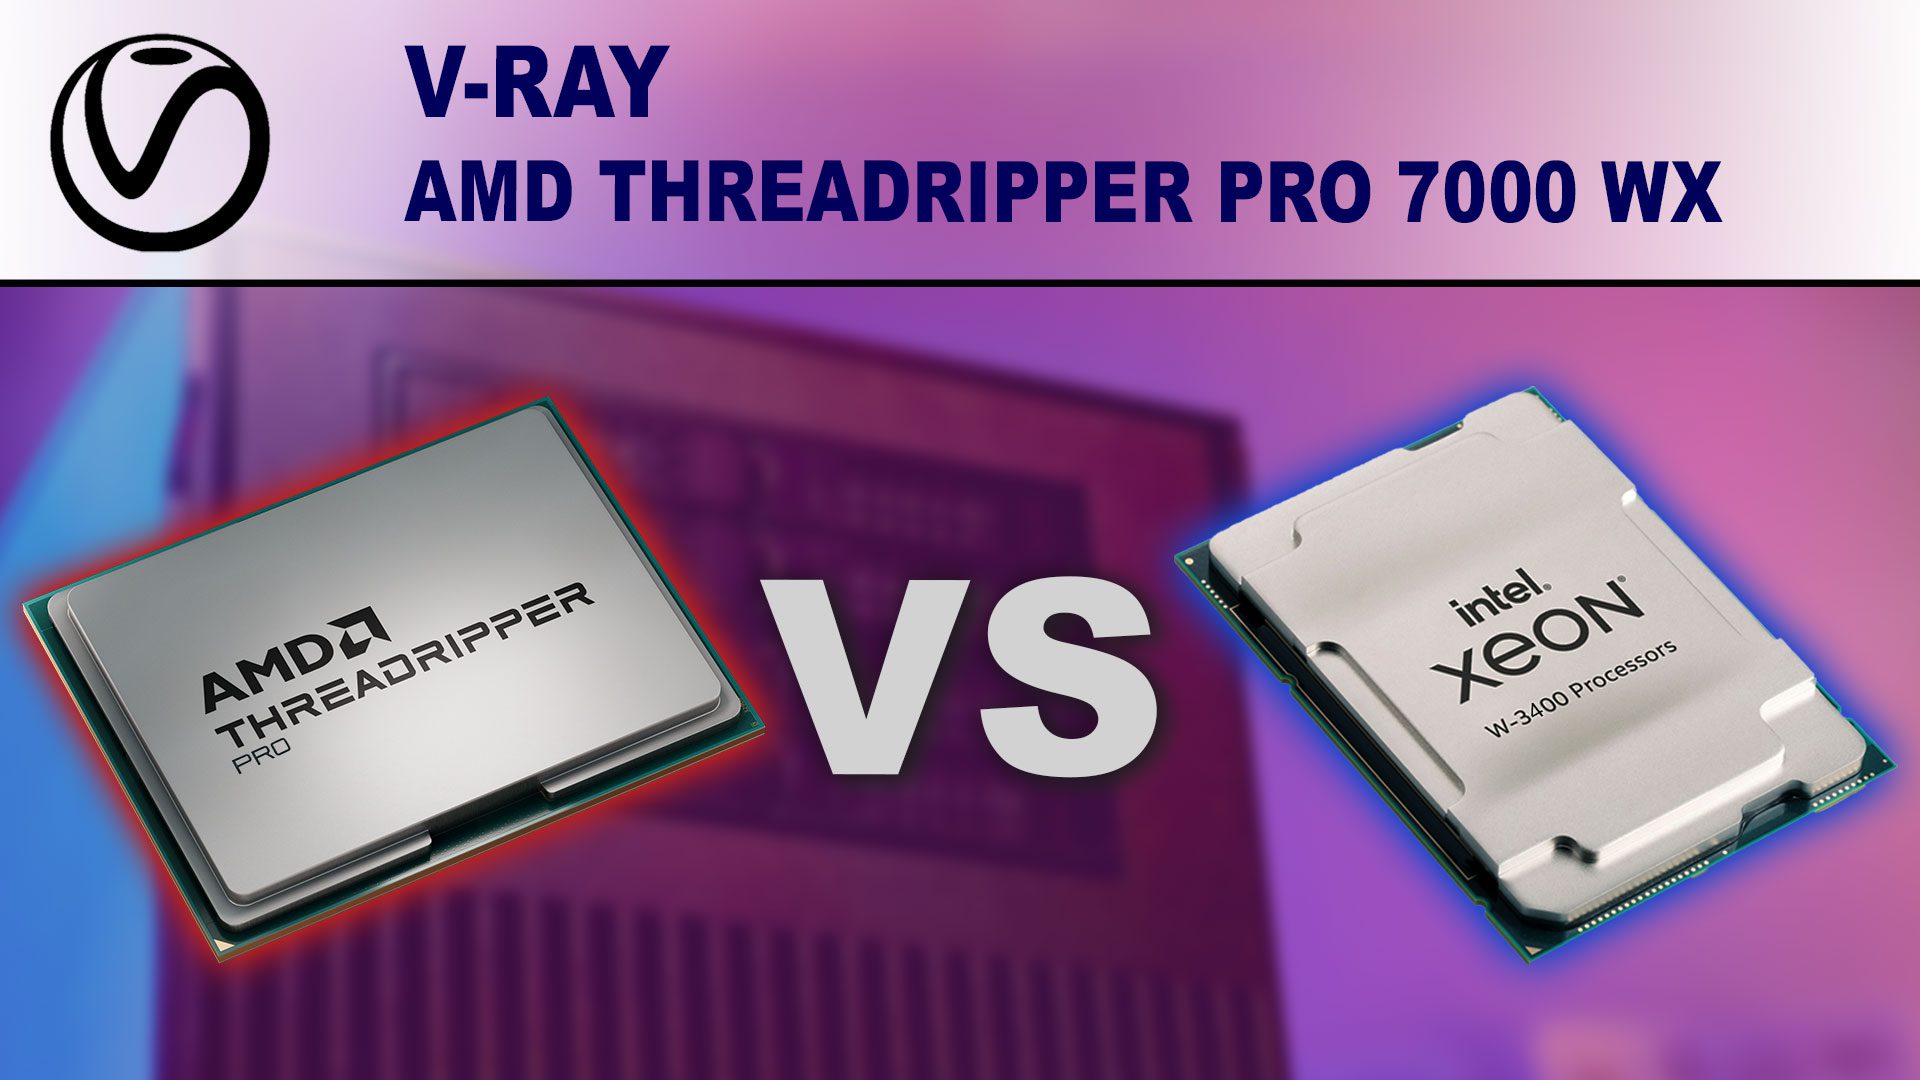 Threadripper Pro 7000 vs Xeon in V-Ray